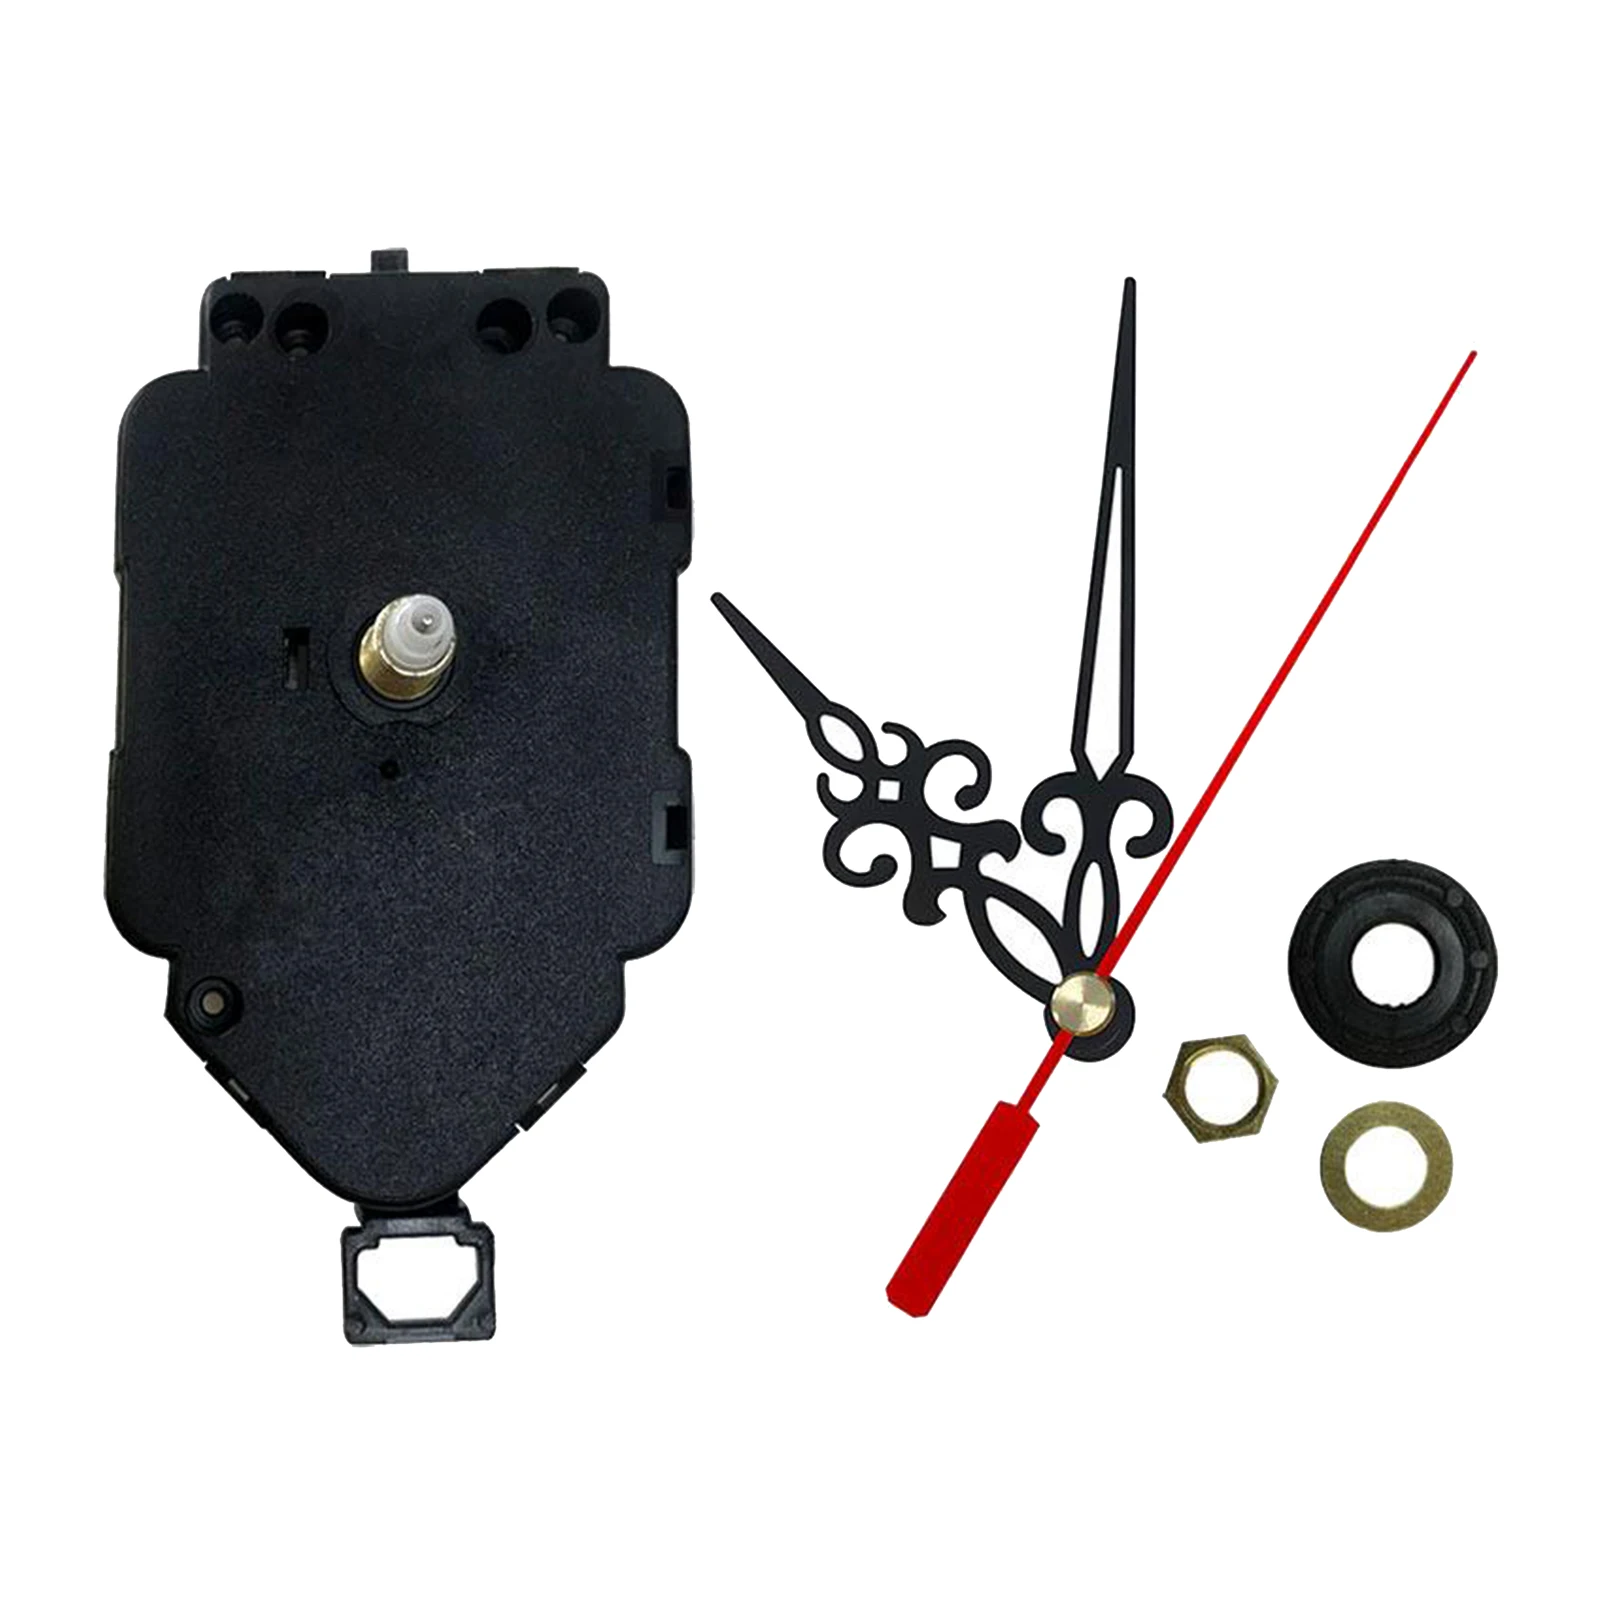 Quartz Pendulum Clock Chime Mechanism Movement DIY Replacement Repair Parts Kit